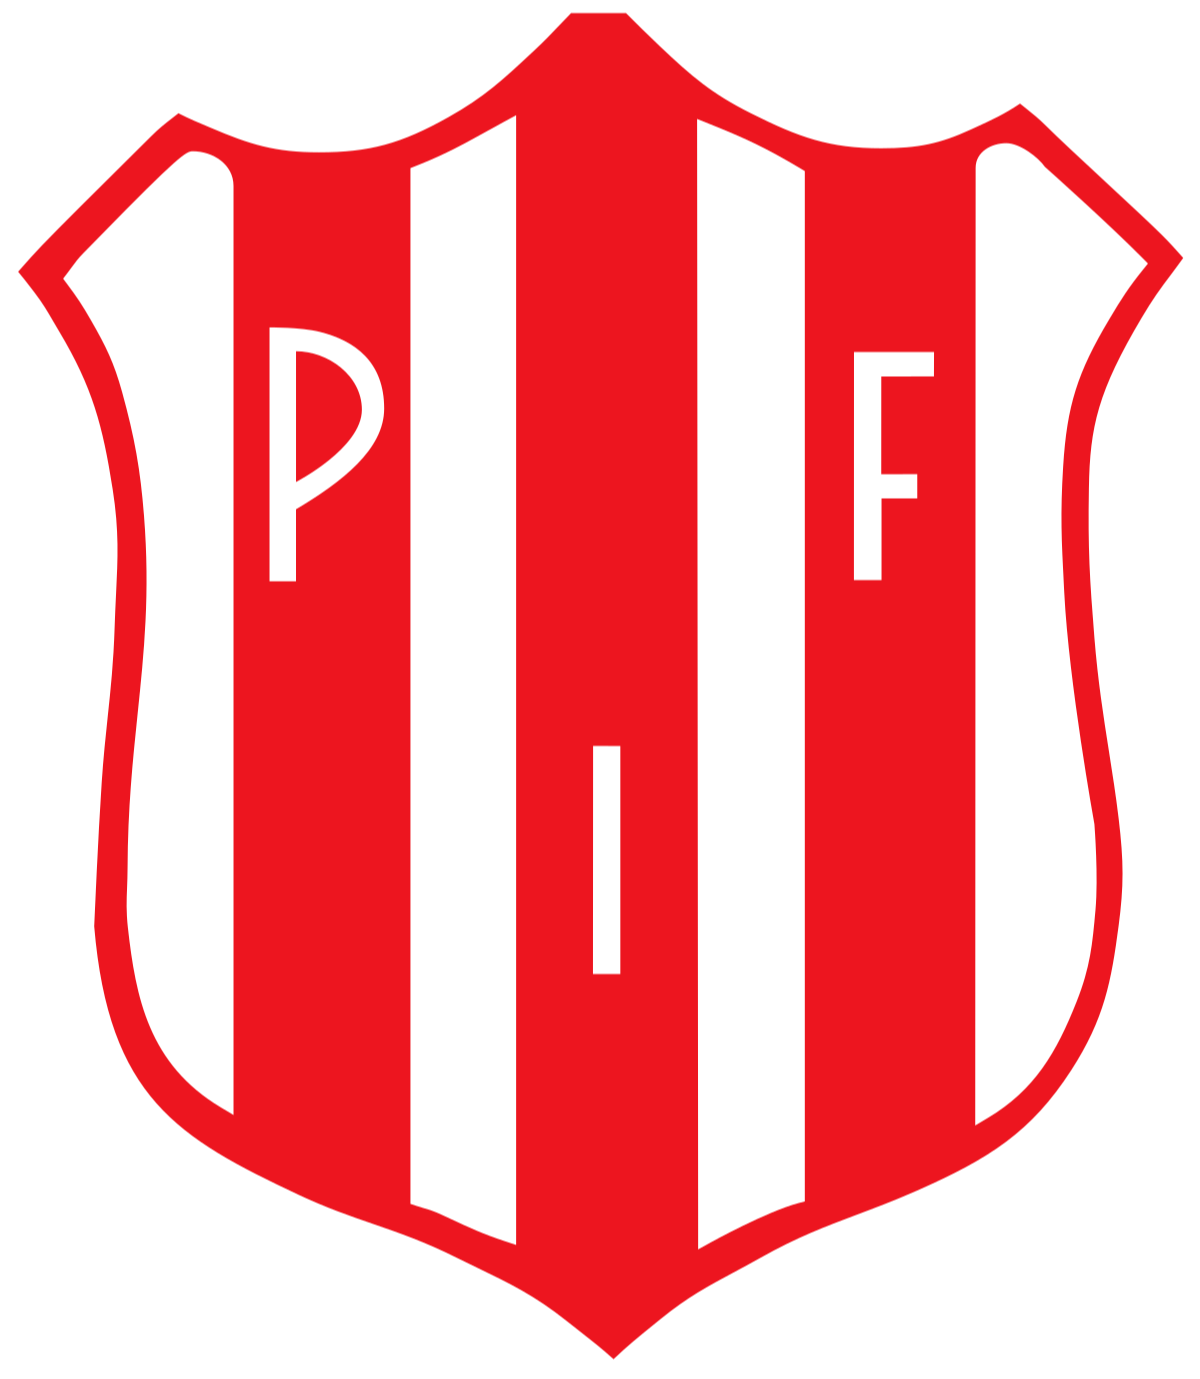 派提亚 logo